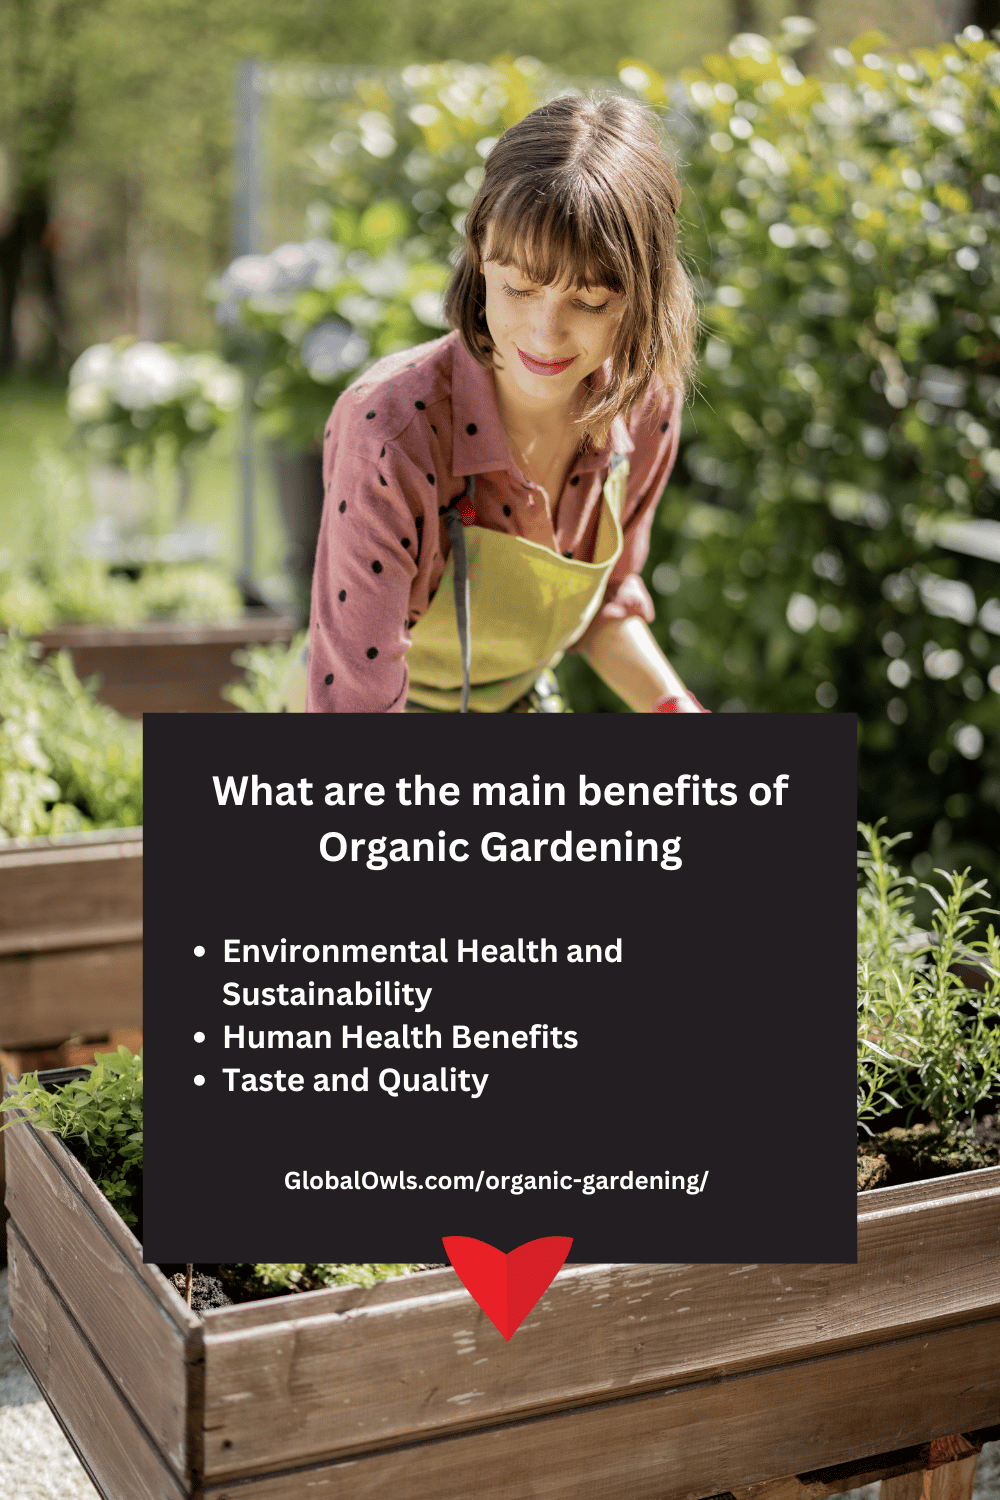 What are the main benefits of Organic Gardening